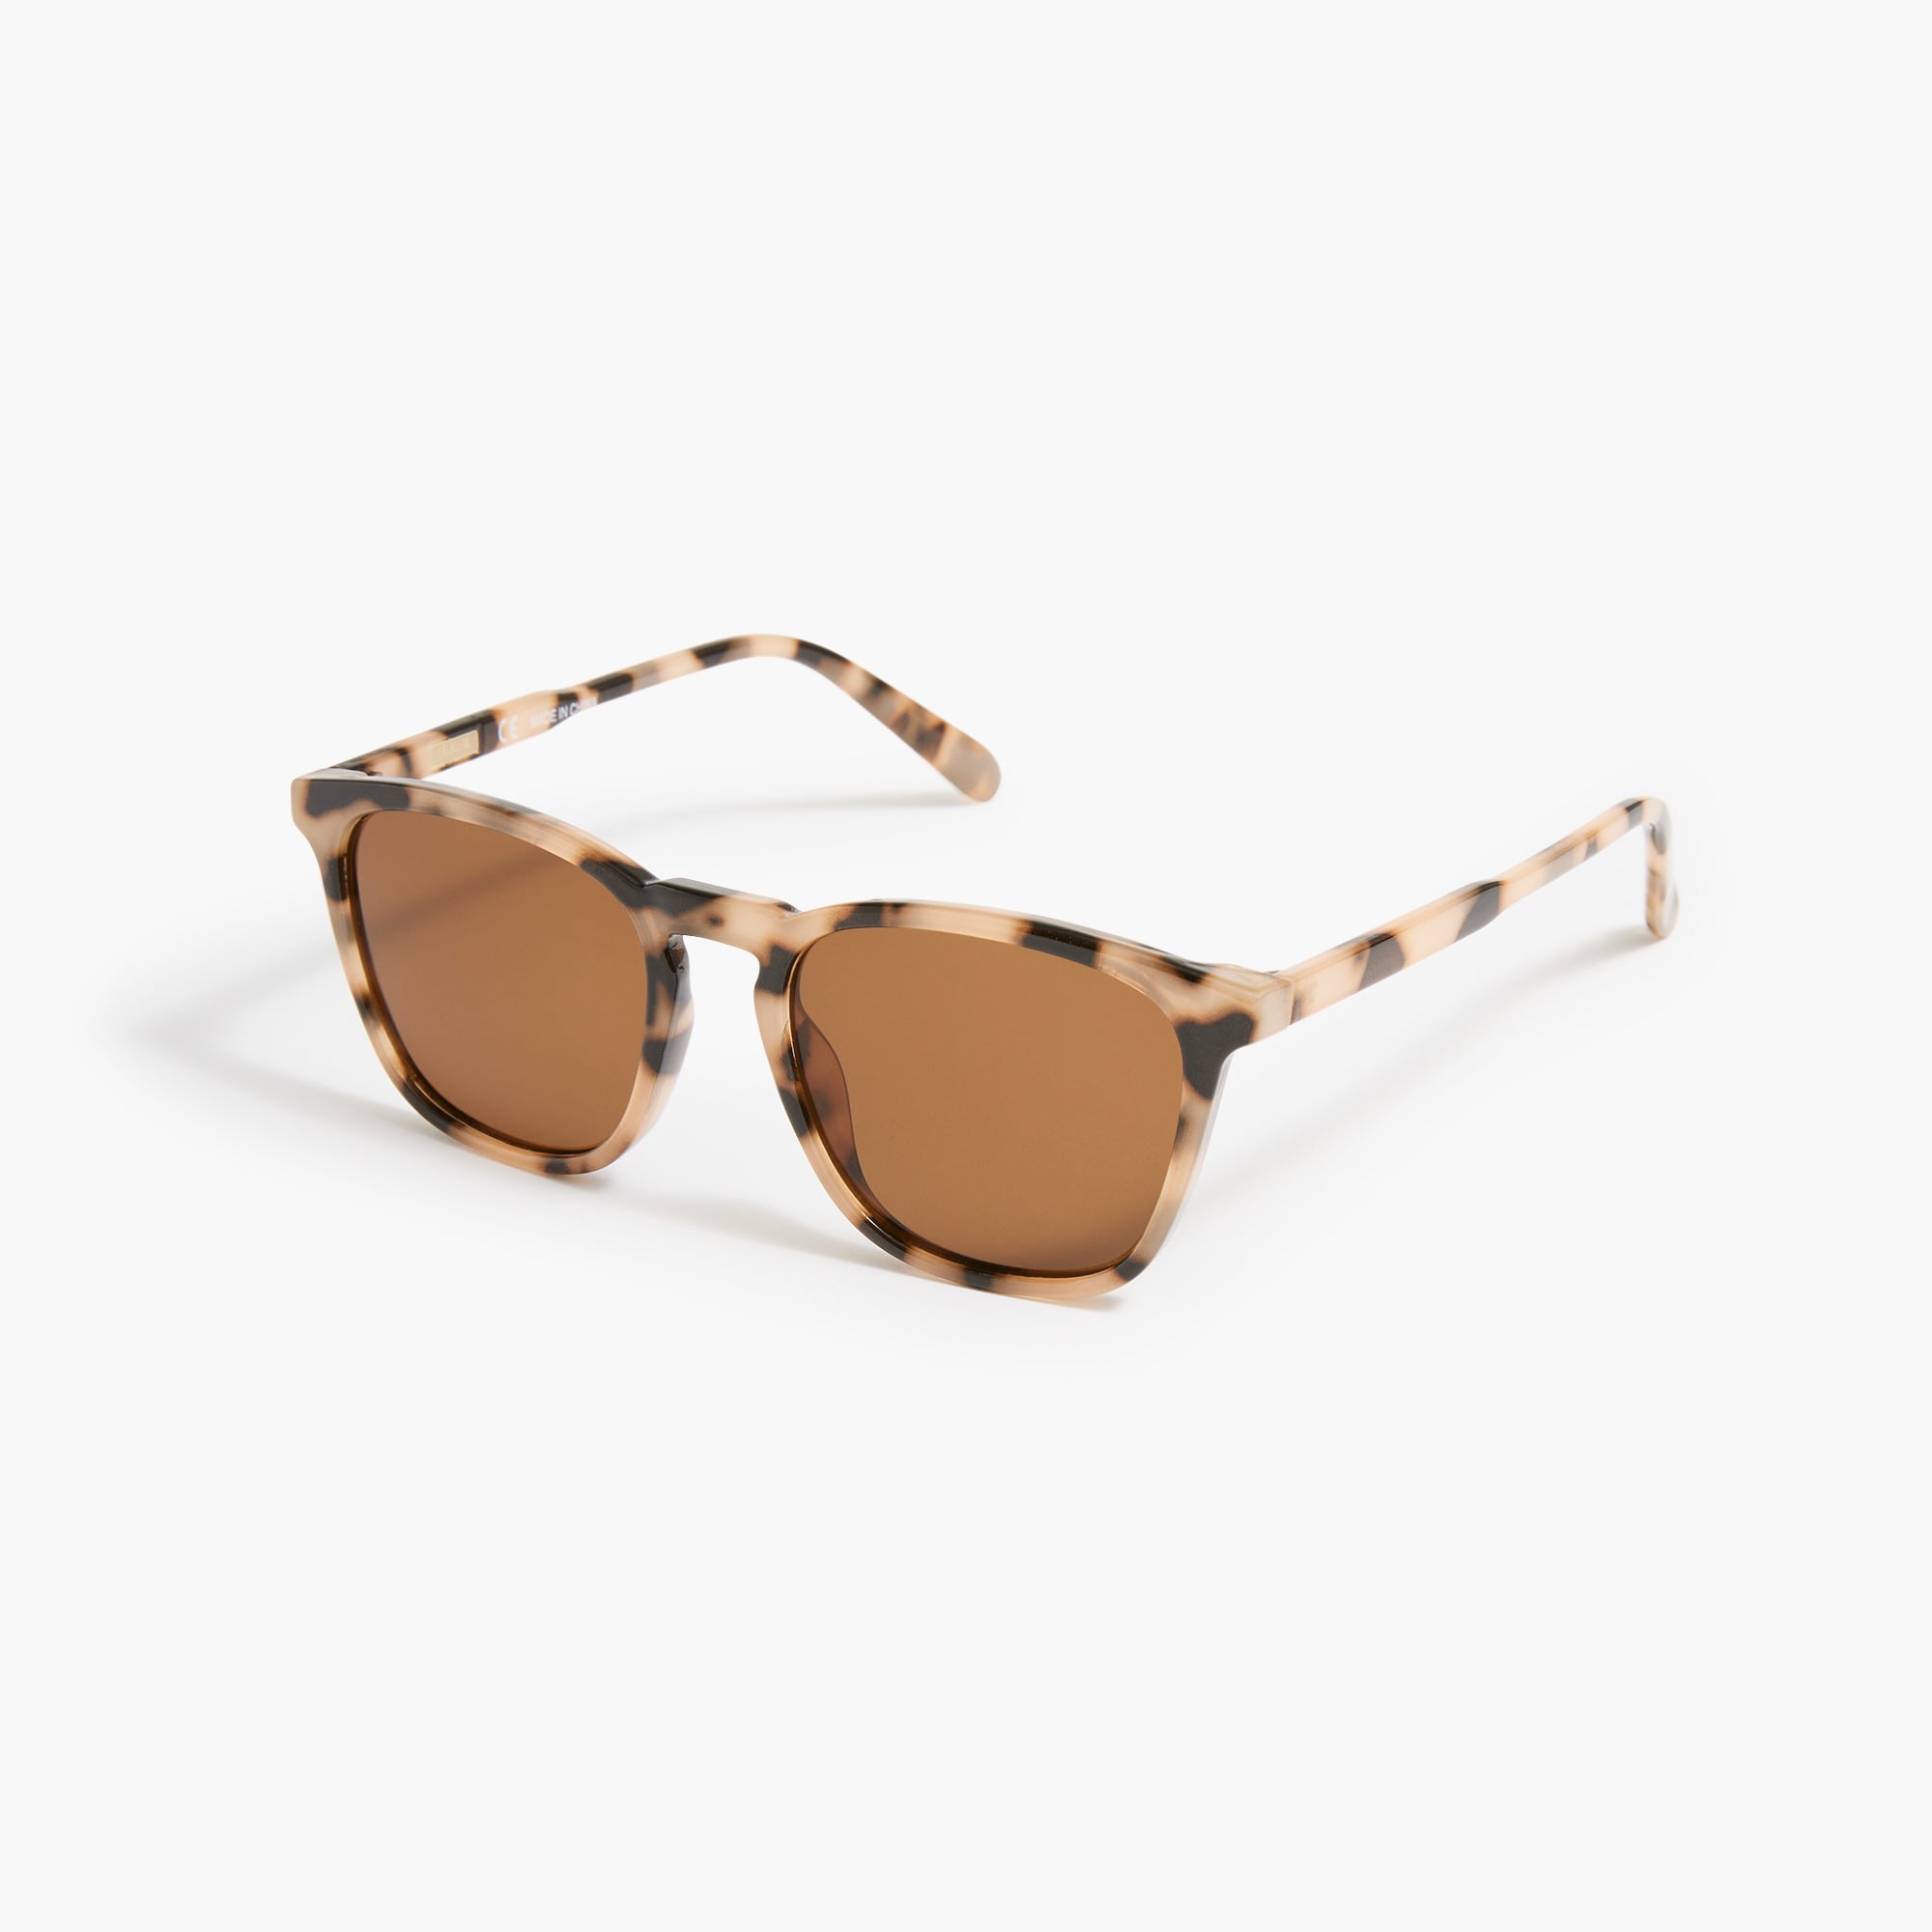 Jcrew Square keyhole sunglasses